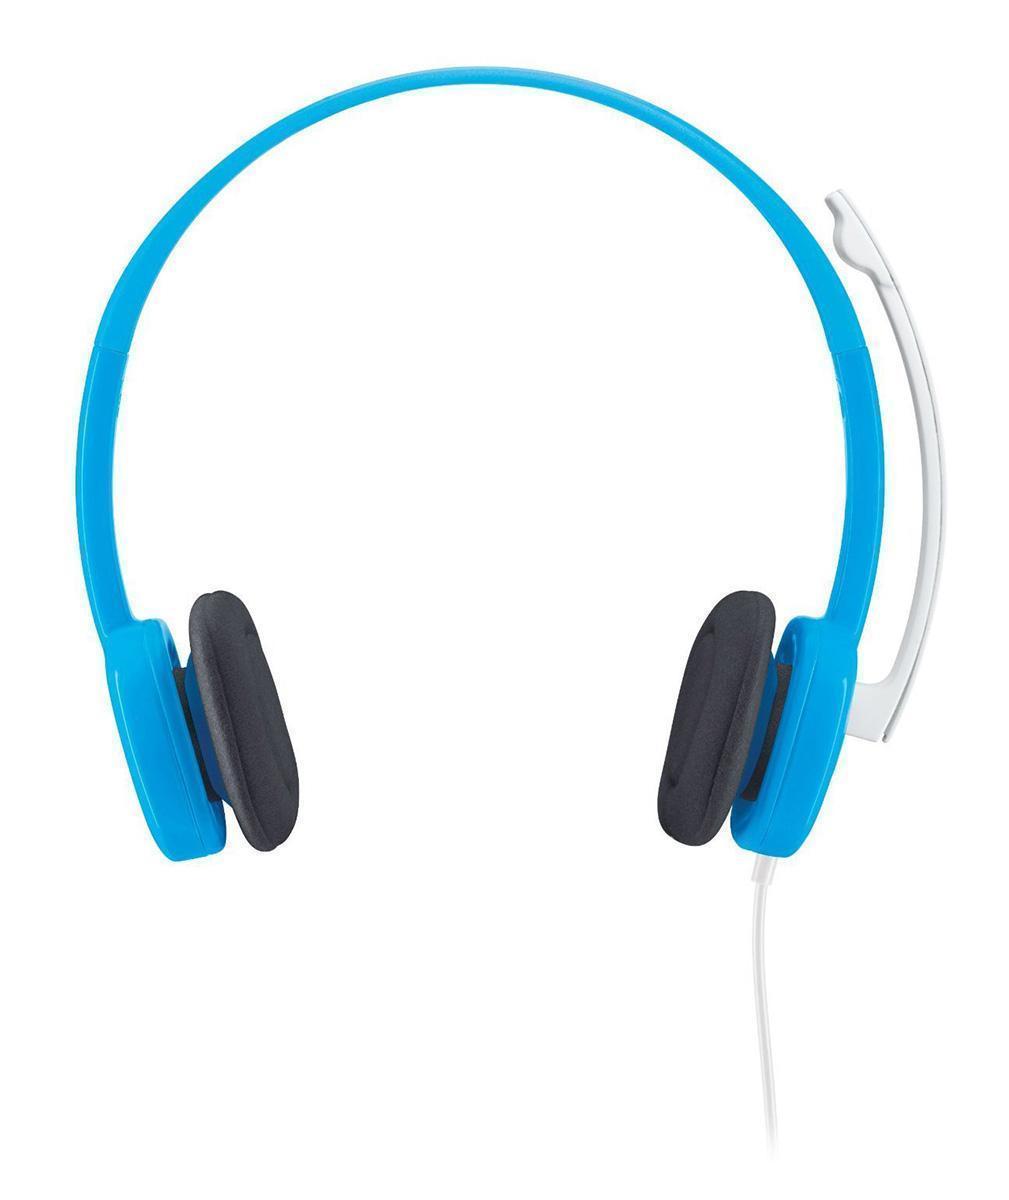 Logitech Stereo Headset H150, Blueberry (981-000368)